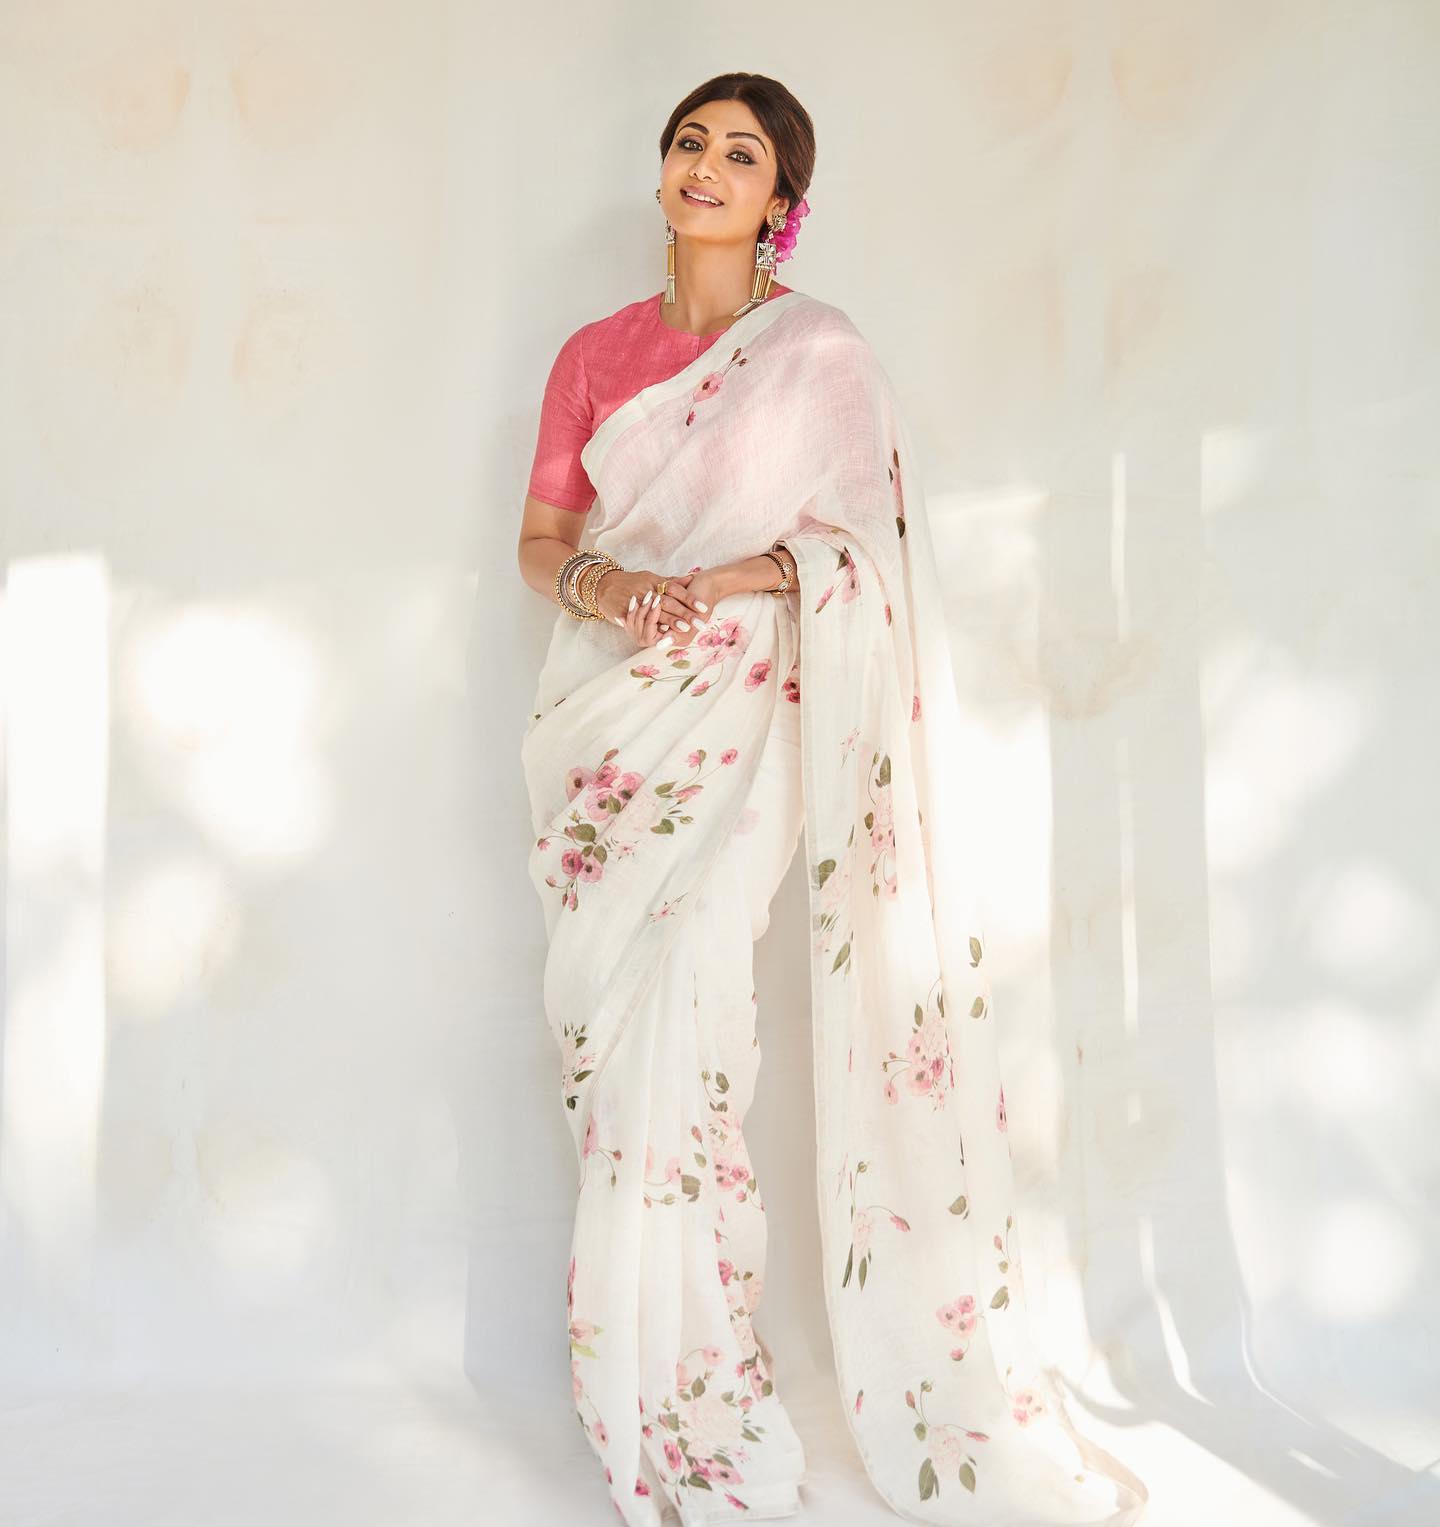 Shilpa Shetty Kicks Of Cherry Blossom Season With A Printed White Saree